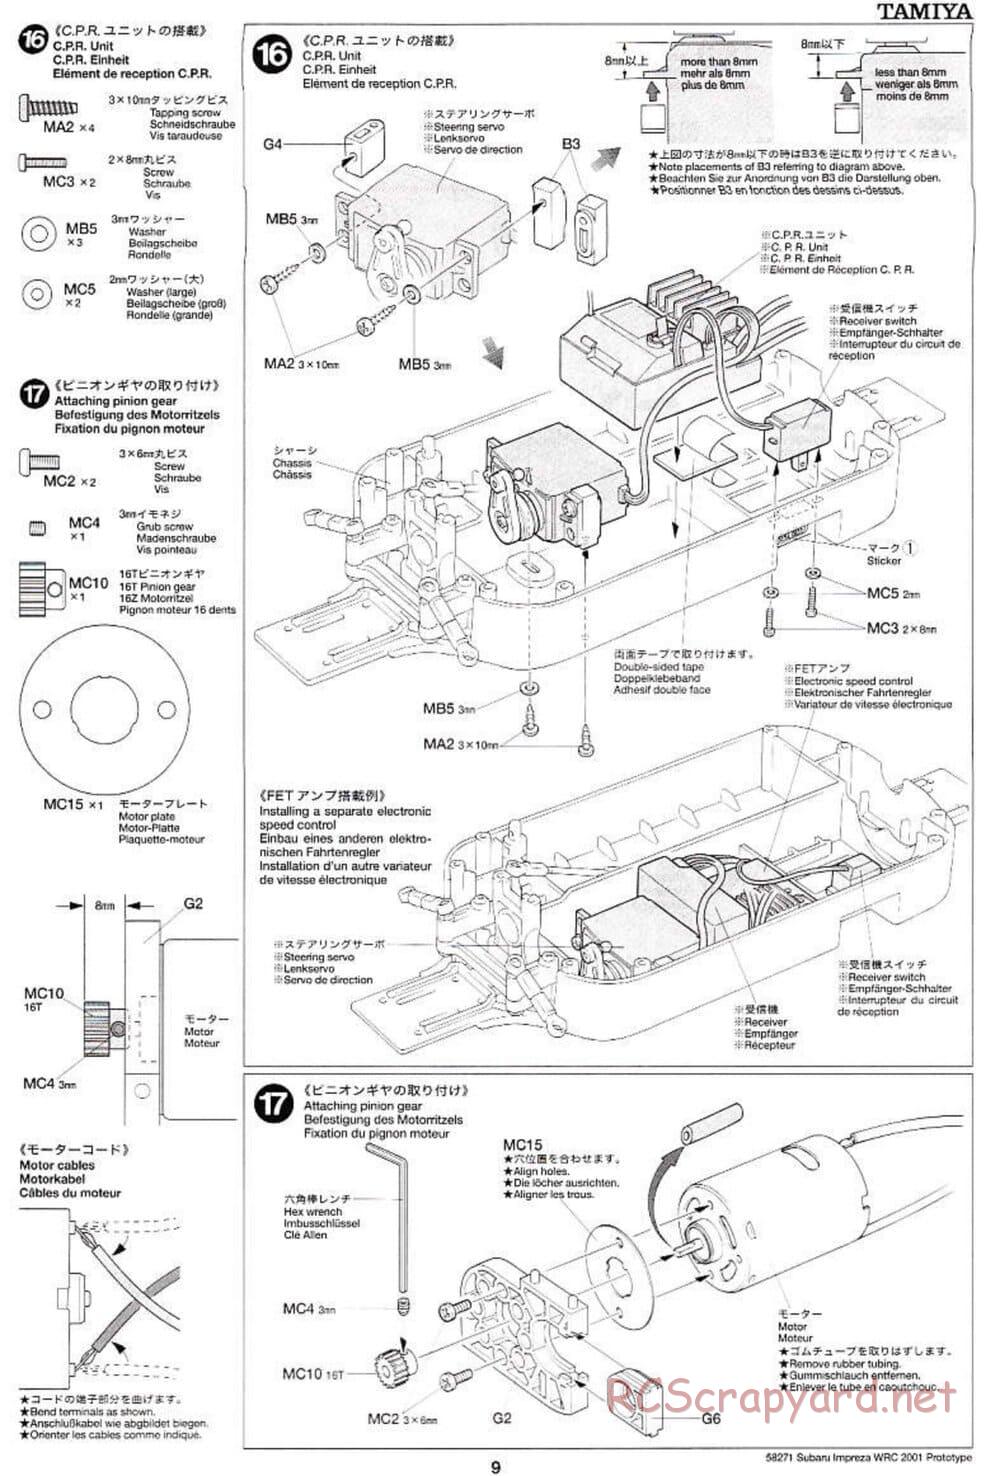 Tamiya - Subaru Impreza WRC 2001 Prototype - TB-01 Chassis - Manual - Page 9